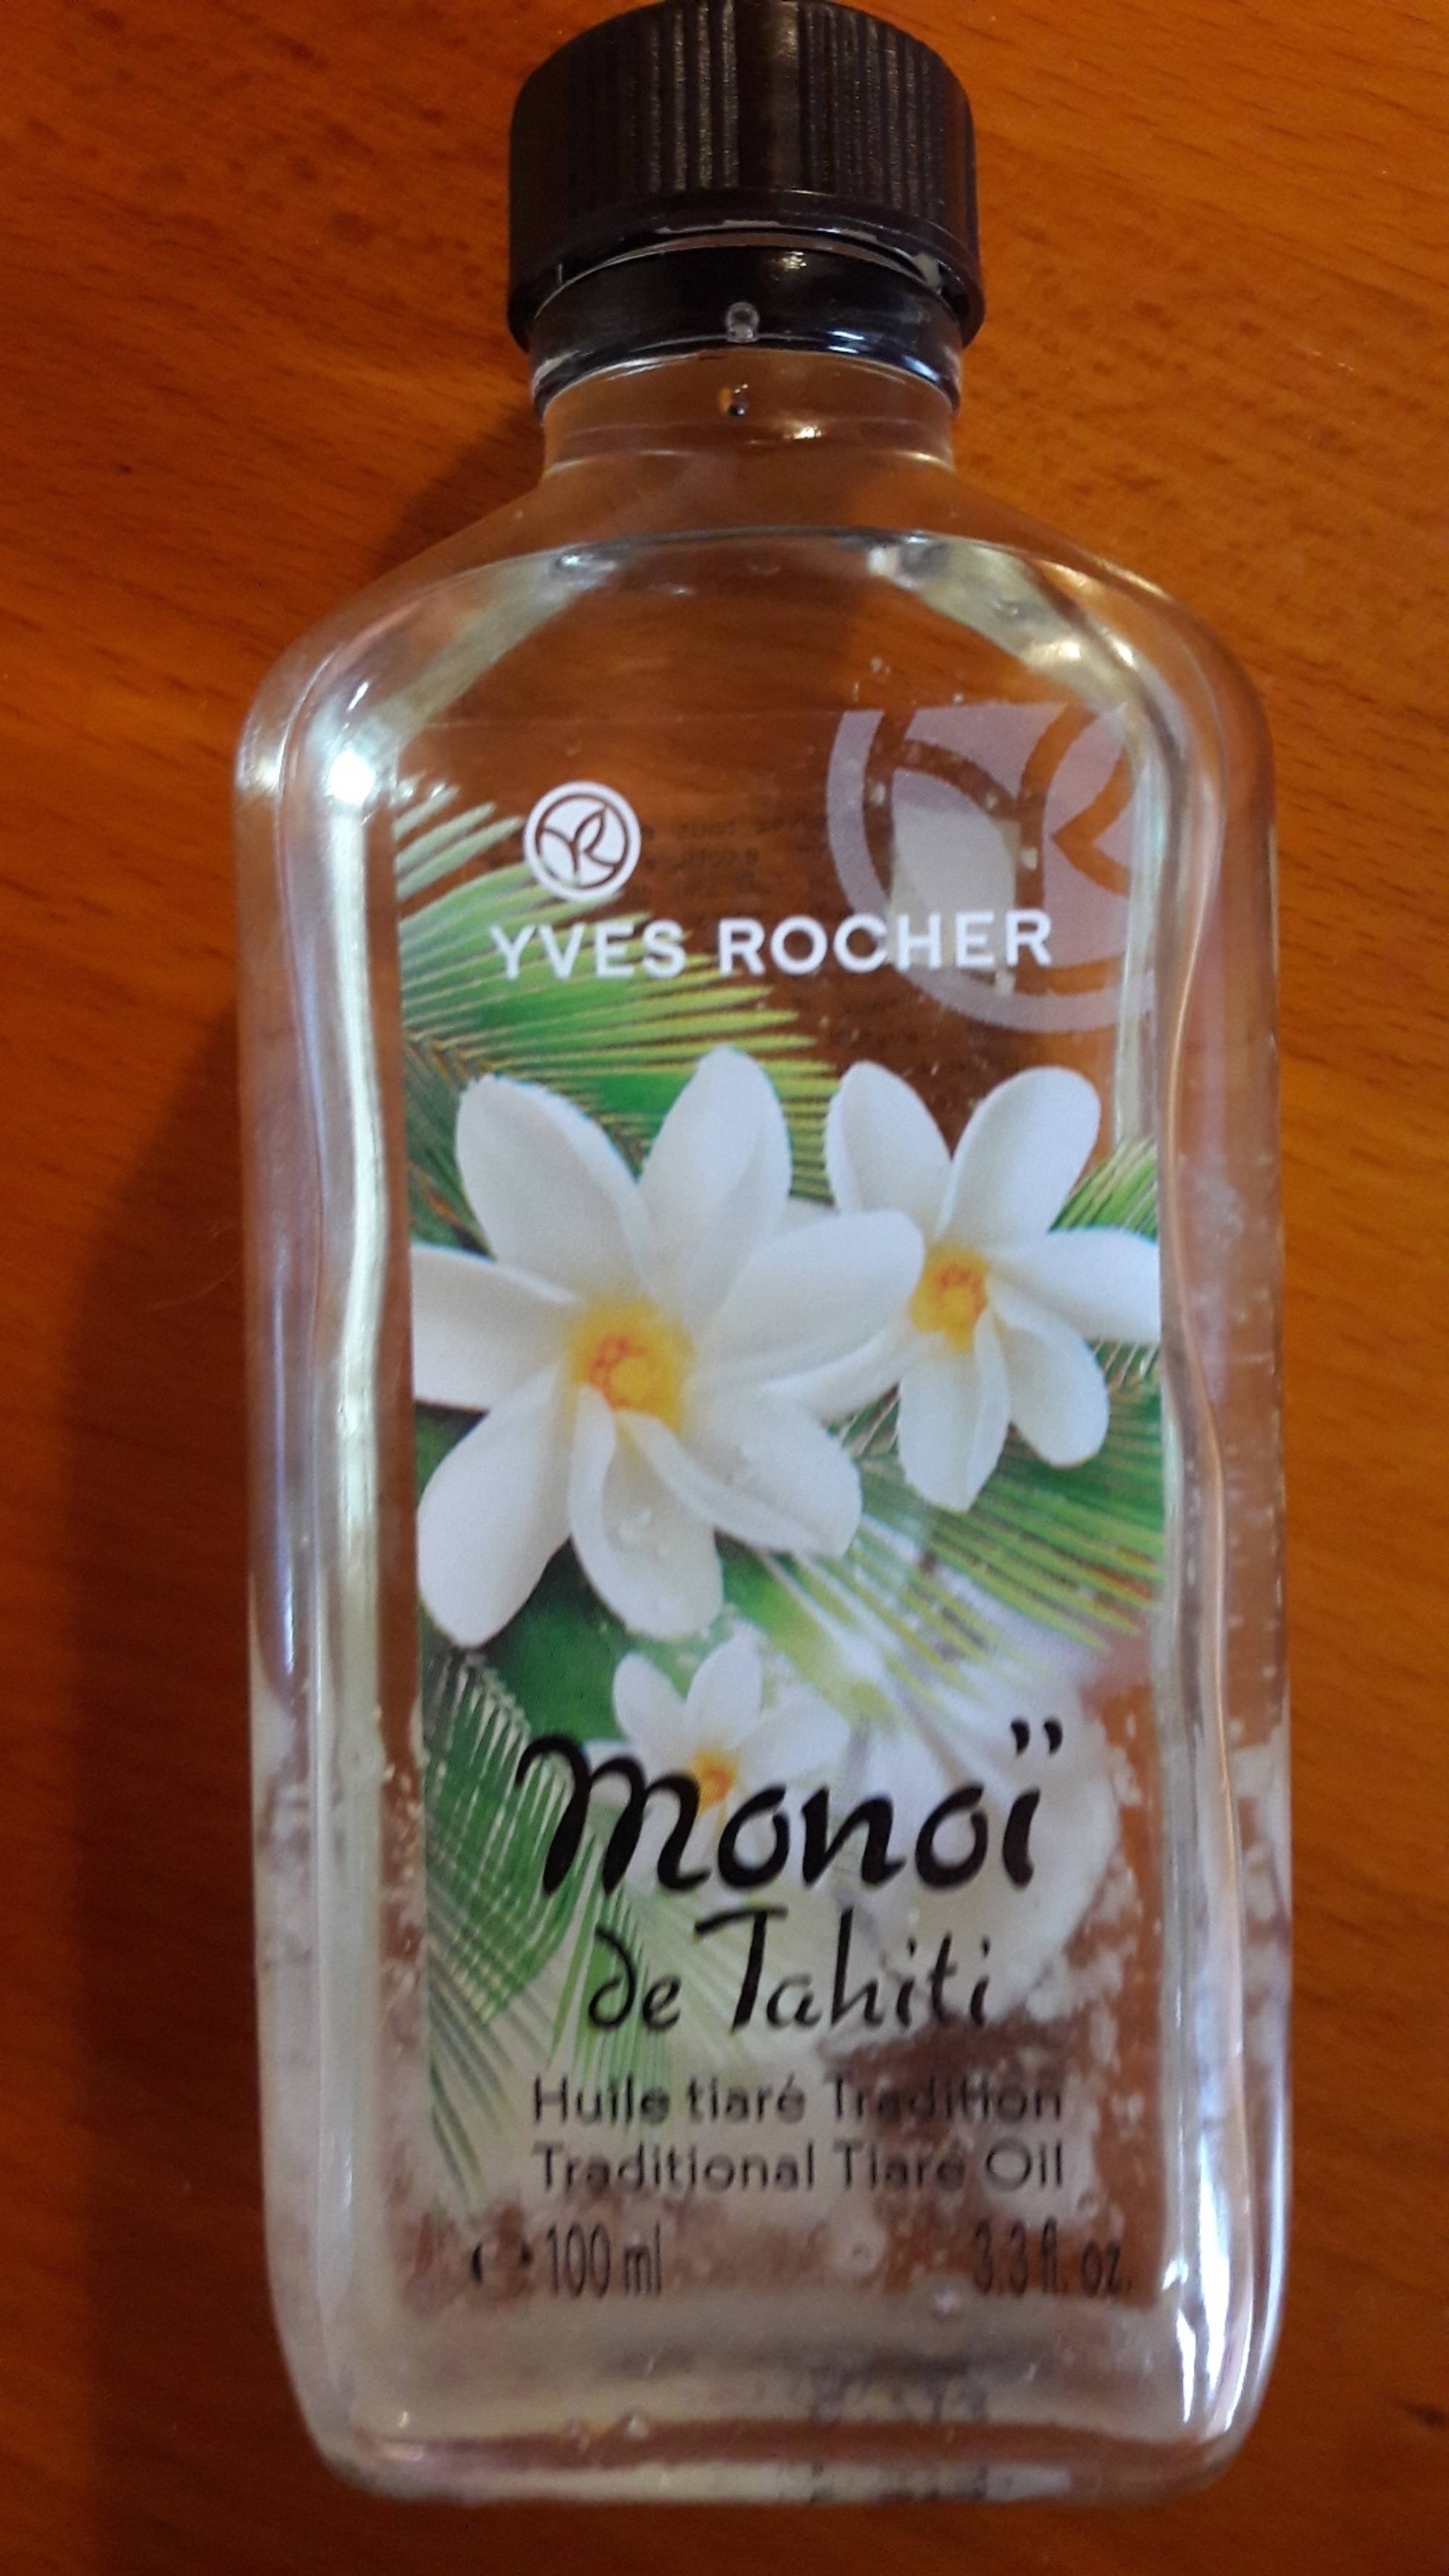 YVES ROCHER - Monoï de Tahiti - Traditional Tiaré Oil